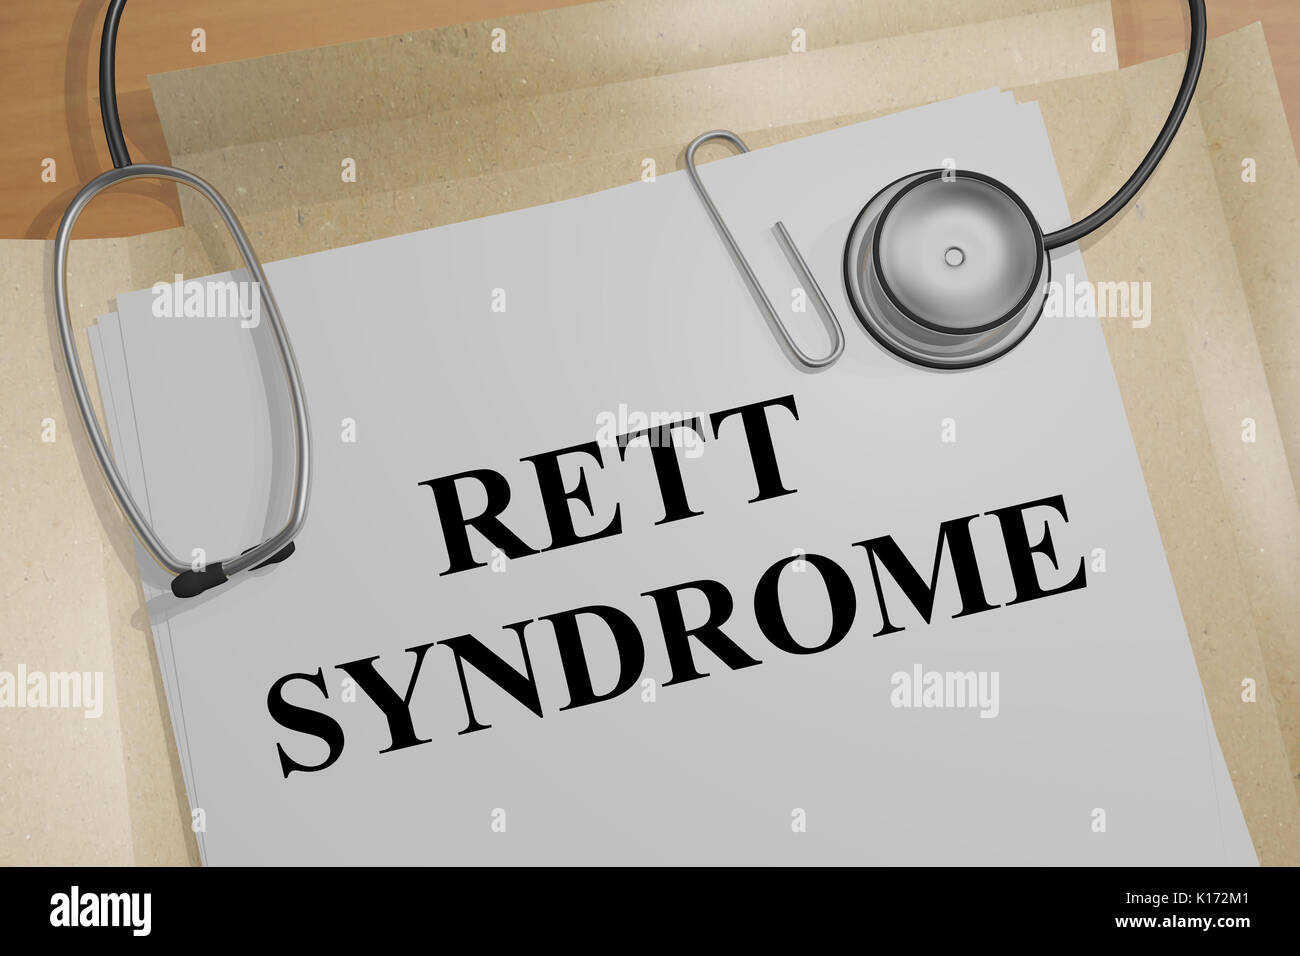 3D illustration of 'RETT SYNDROME' title on medical document Stock Photo